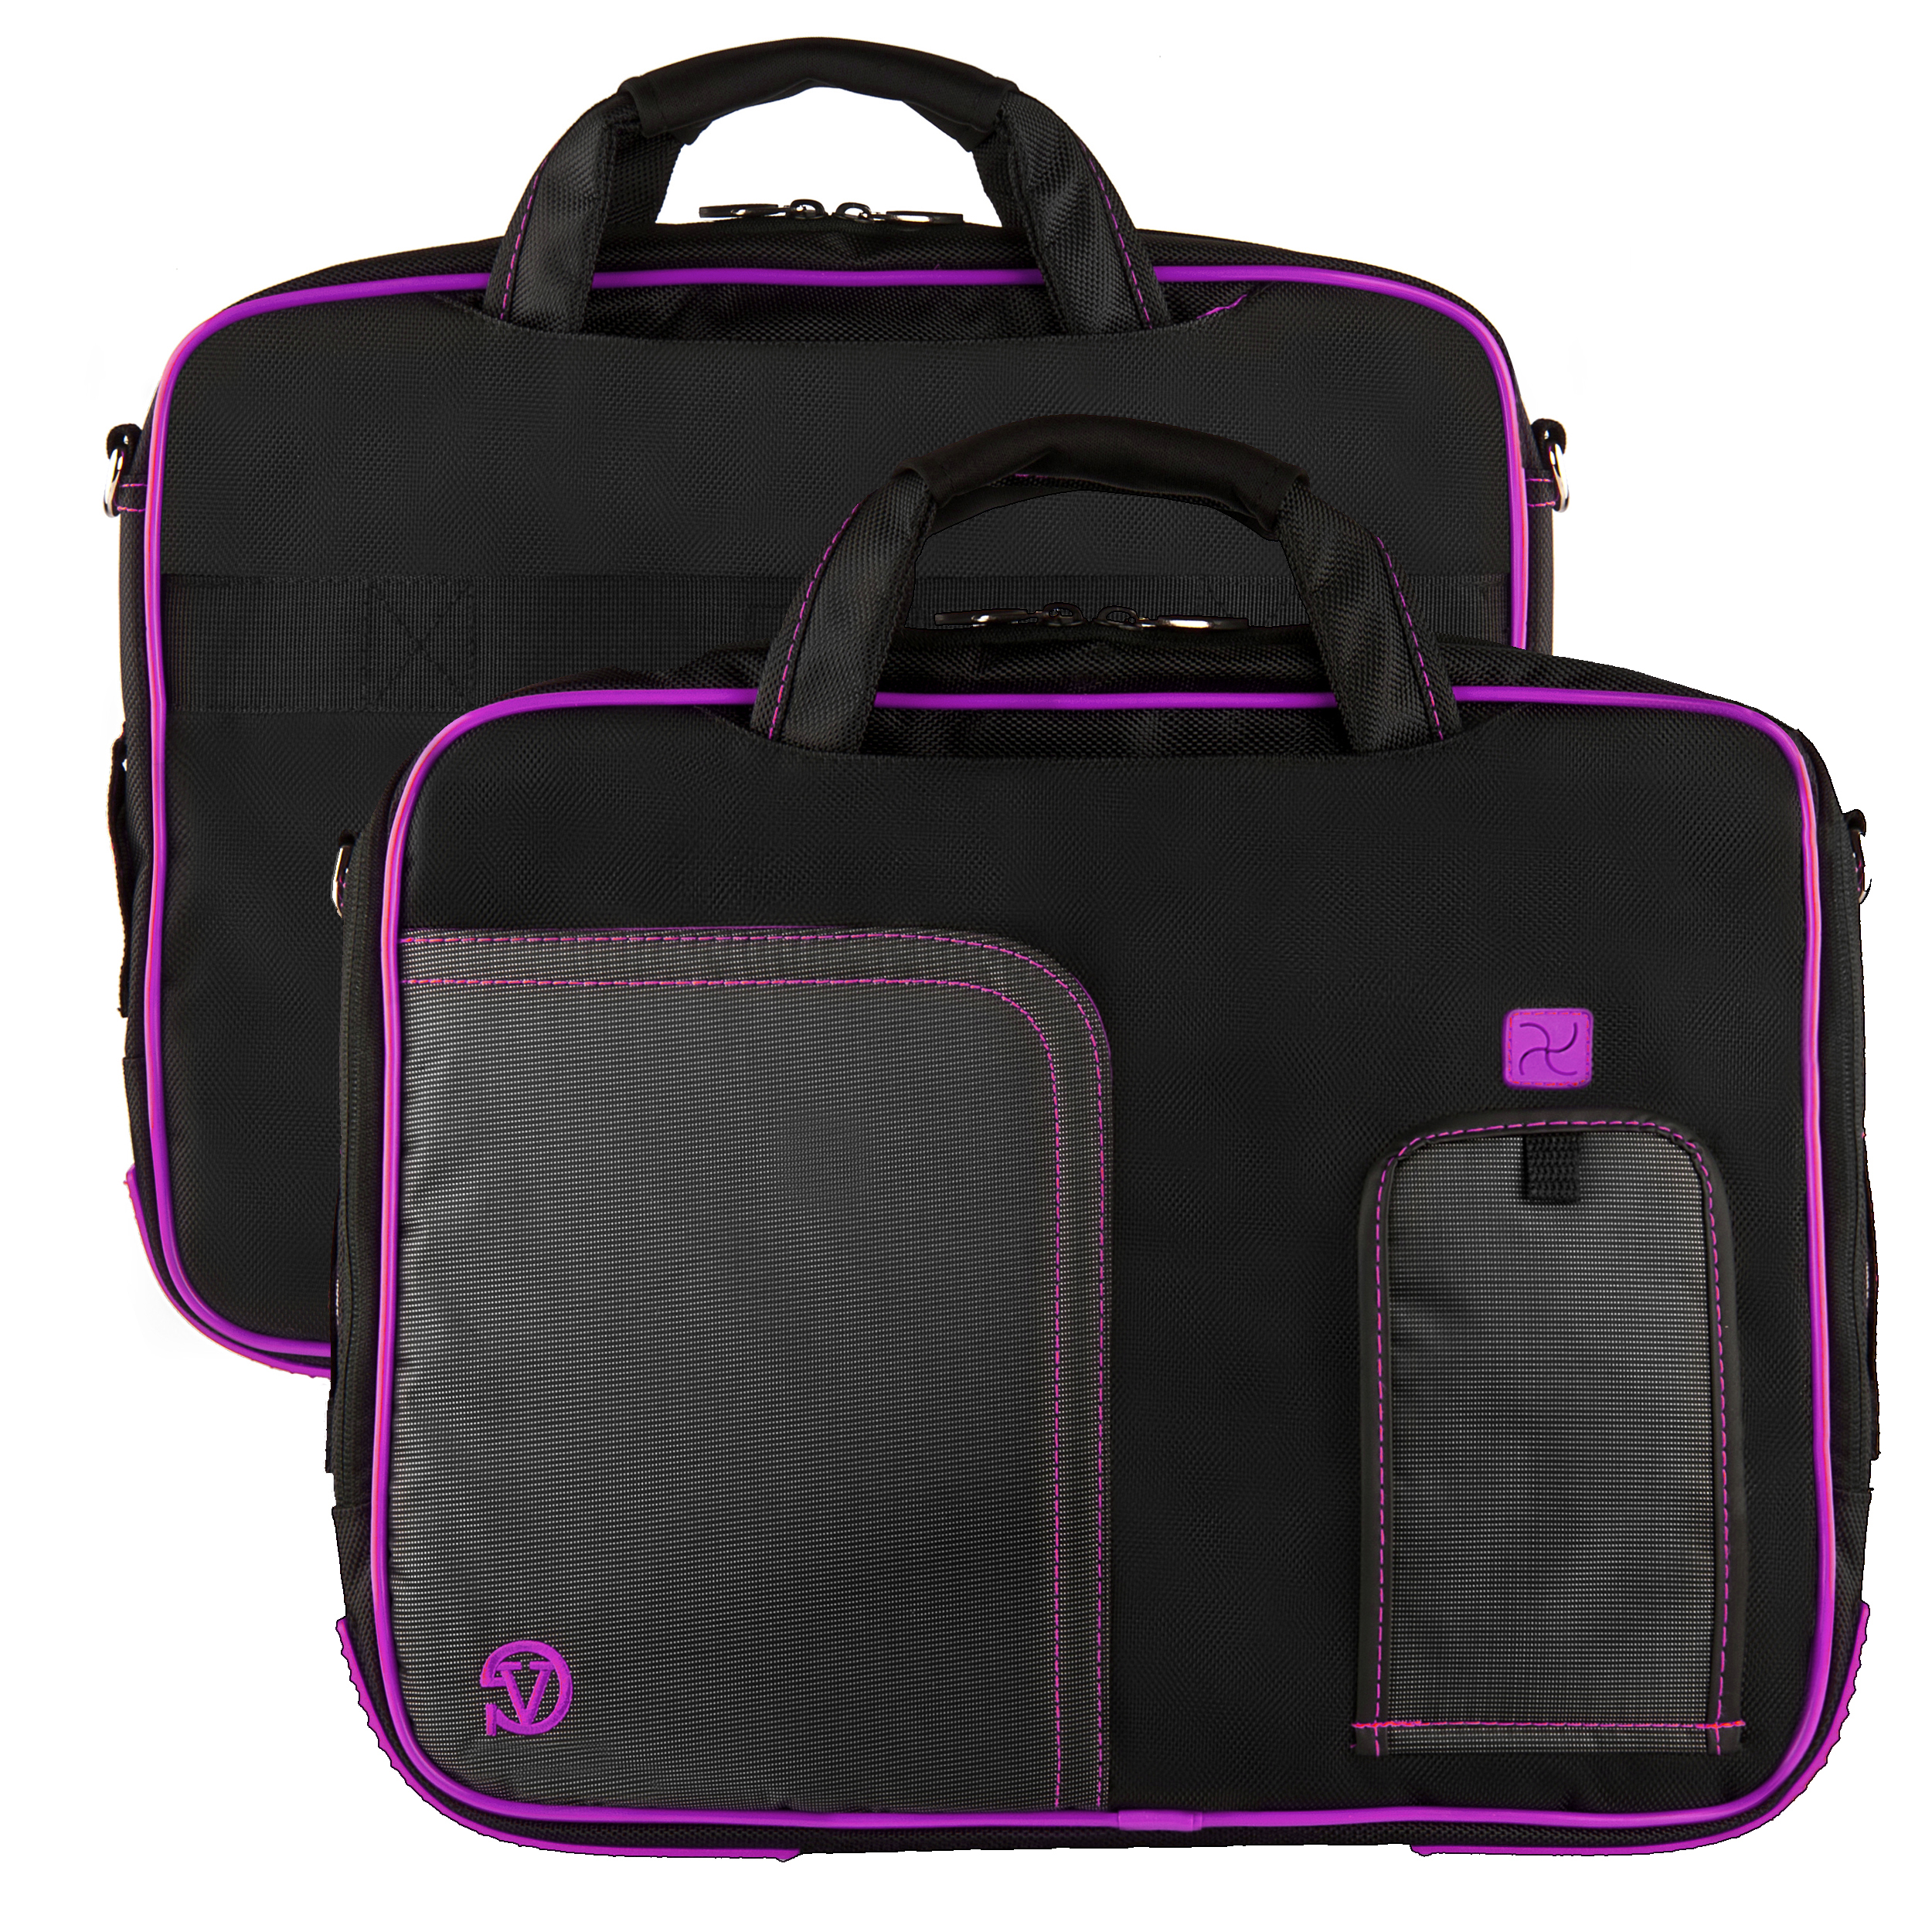 VANGODDY Pindar Laptop Carrying Case Bag with Padded and Adjustable Shoulder Strap fits HP 13, 13.3 inch Laptops / Netbooks / Ultrabooks